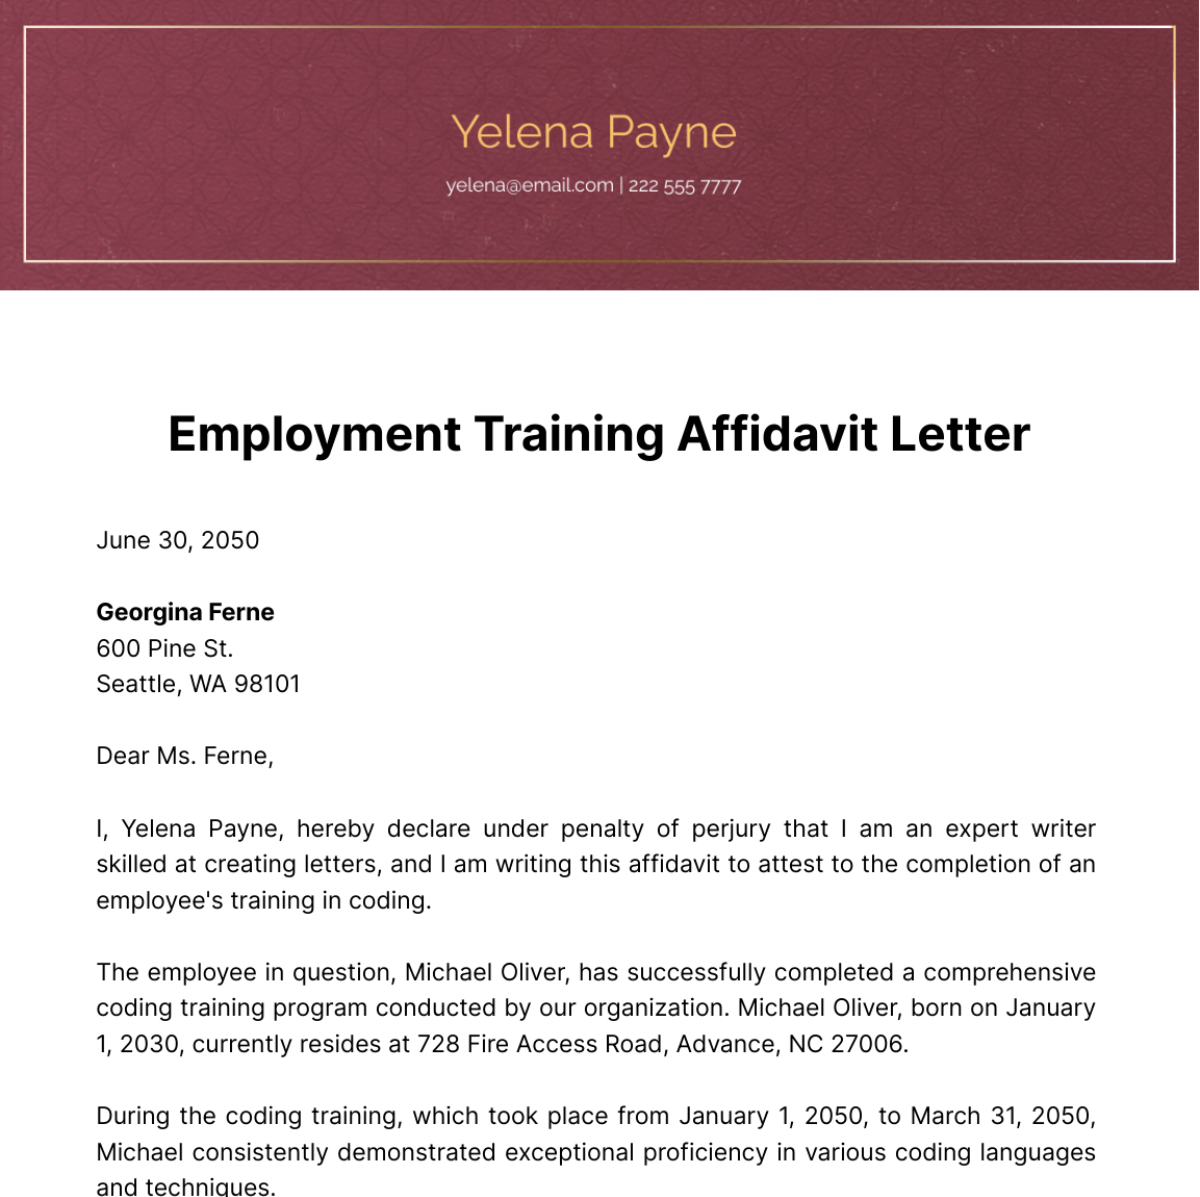 Employment Training Affidavit Letter Template